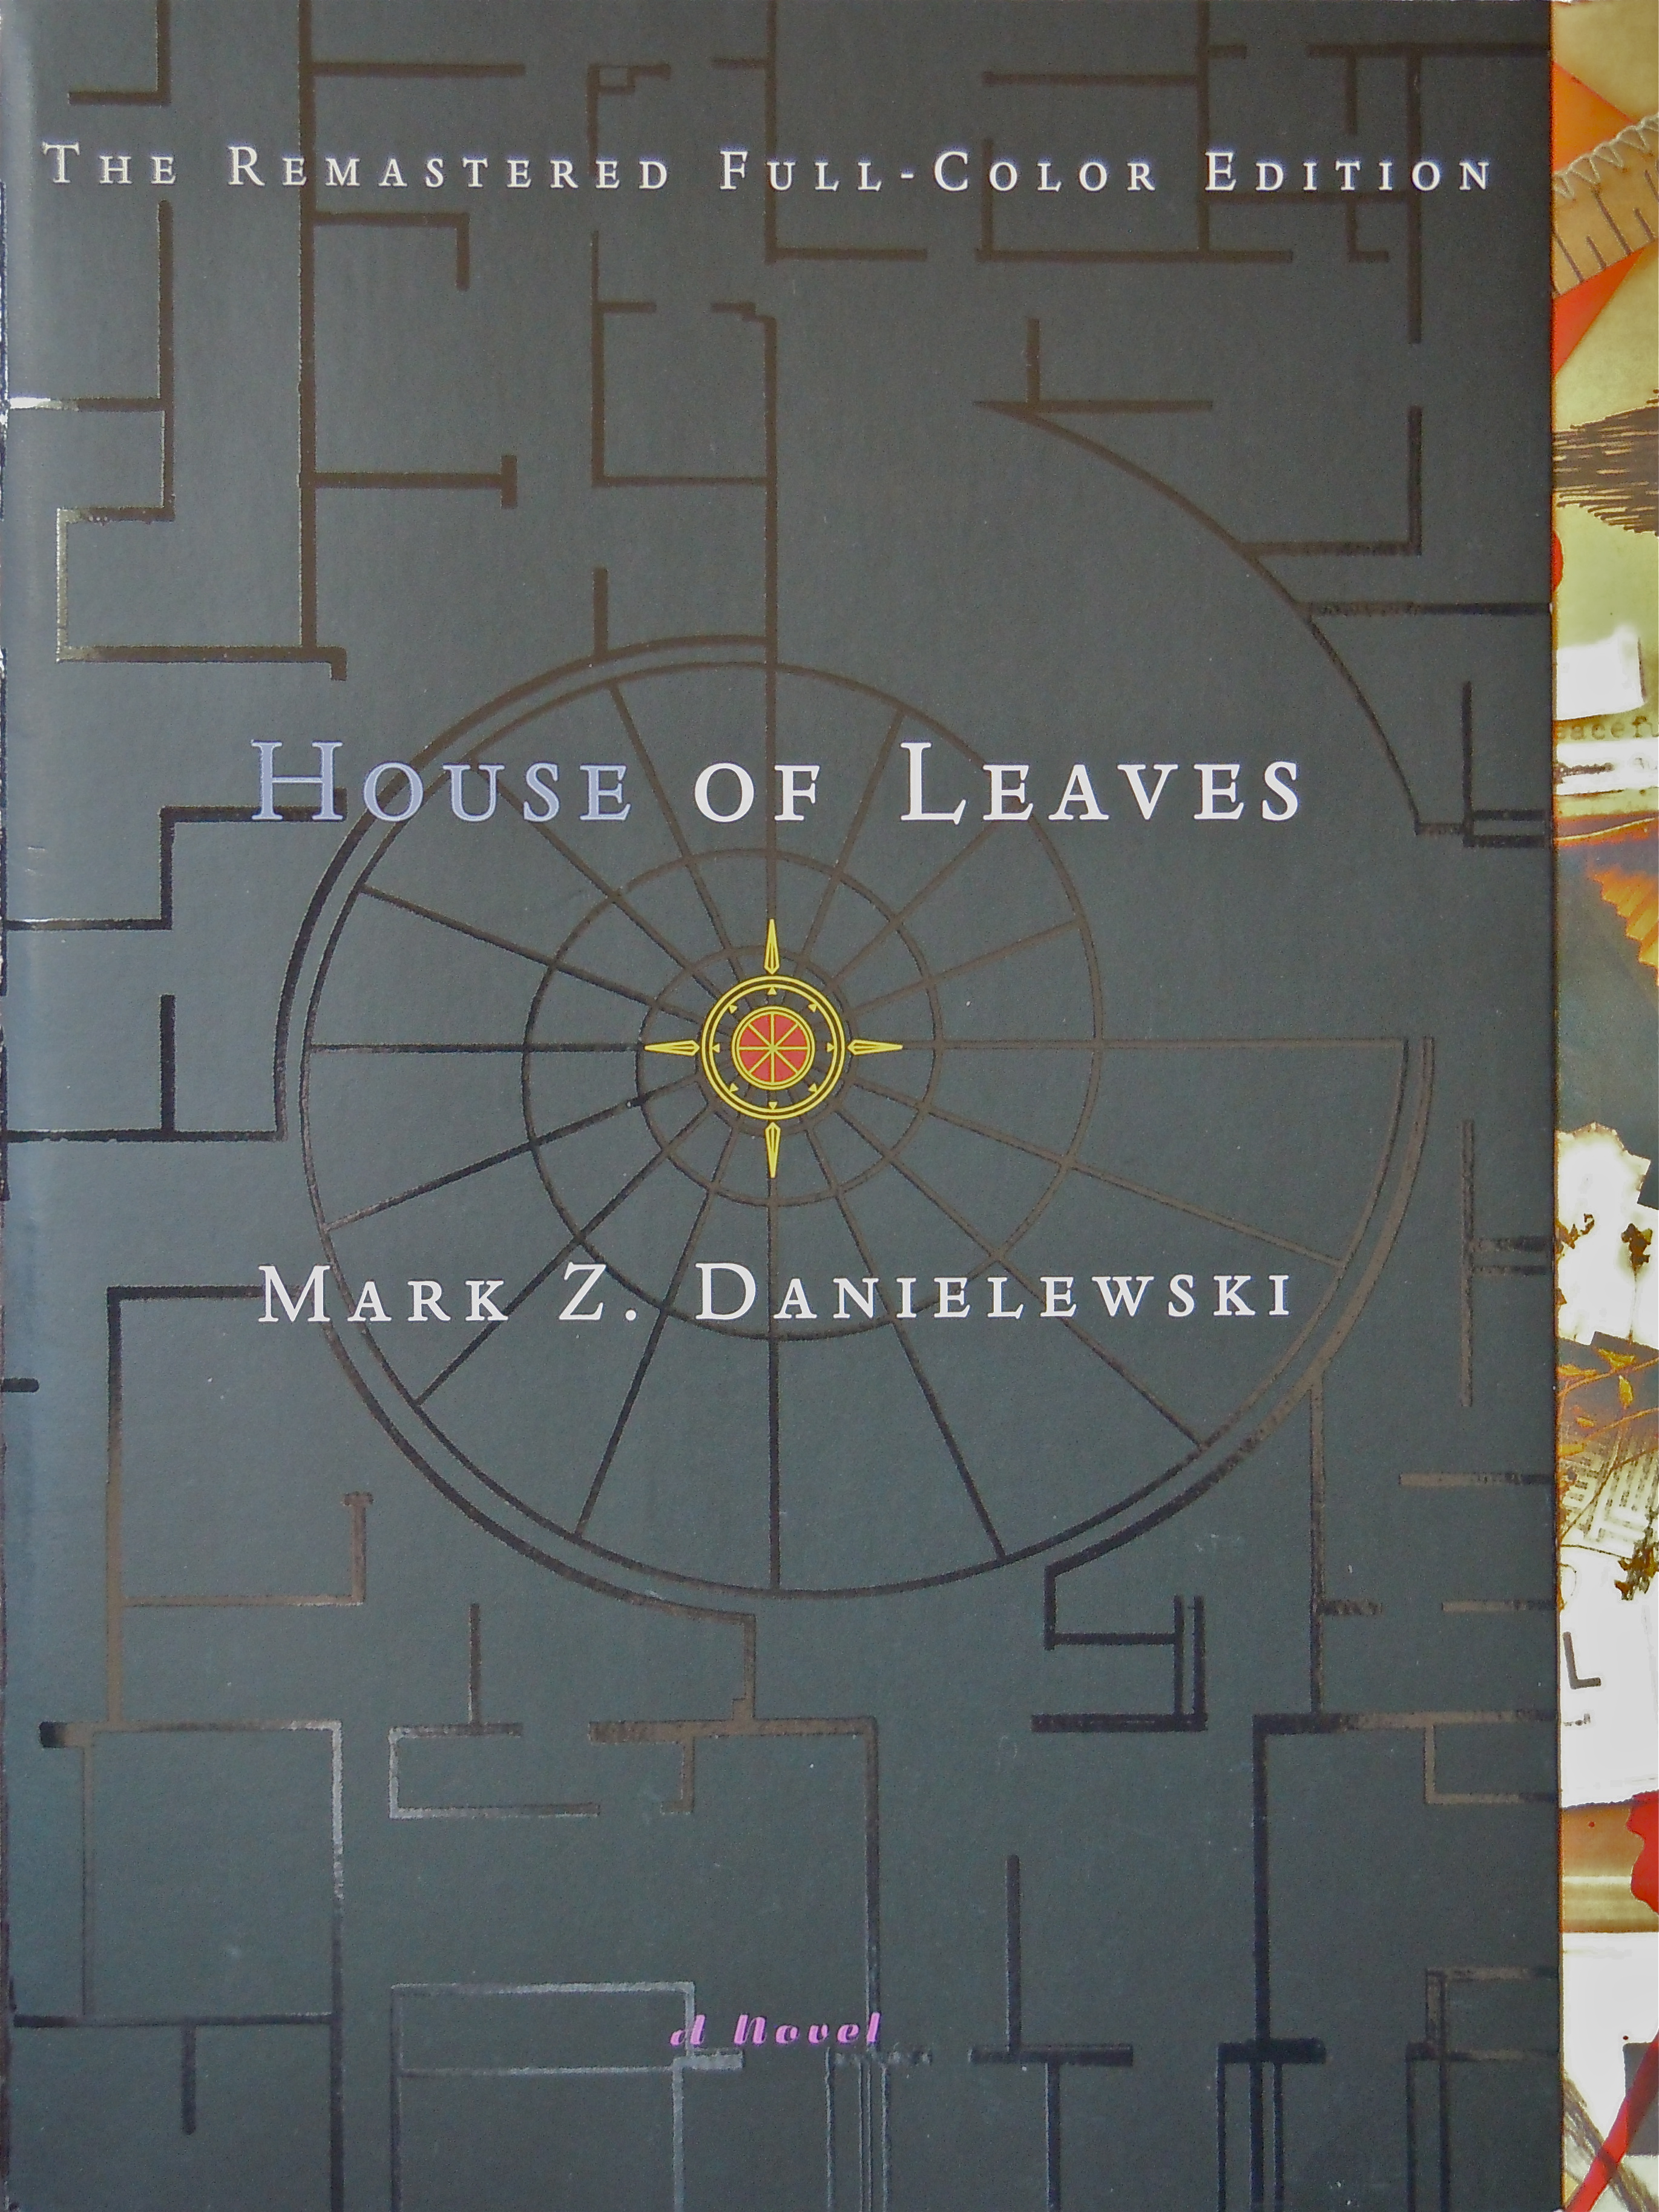 Mark z. danielewski   house of leaves book review  